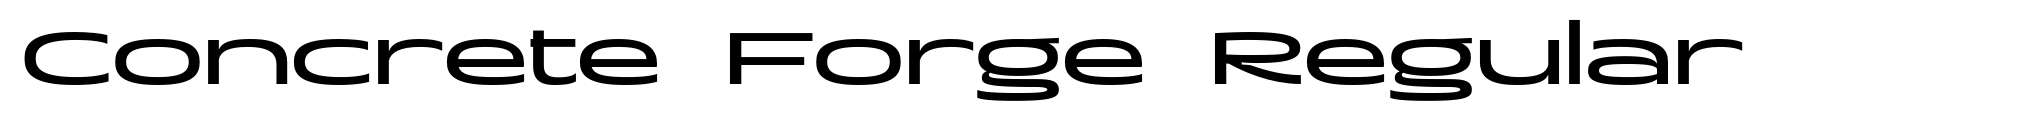 Concrete Forge Regular image